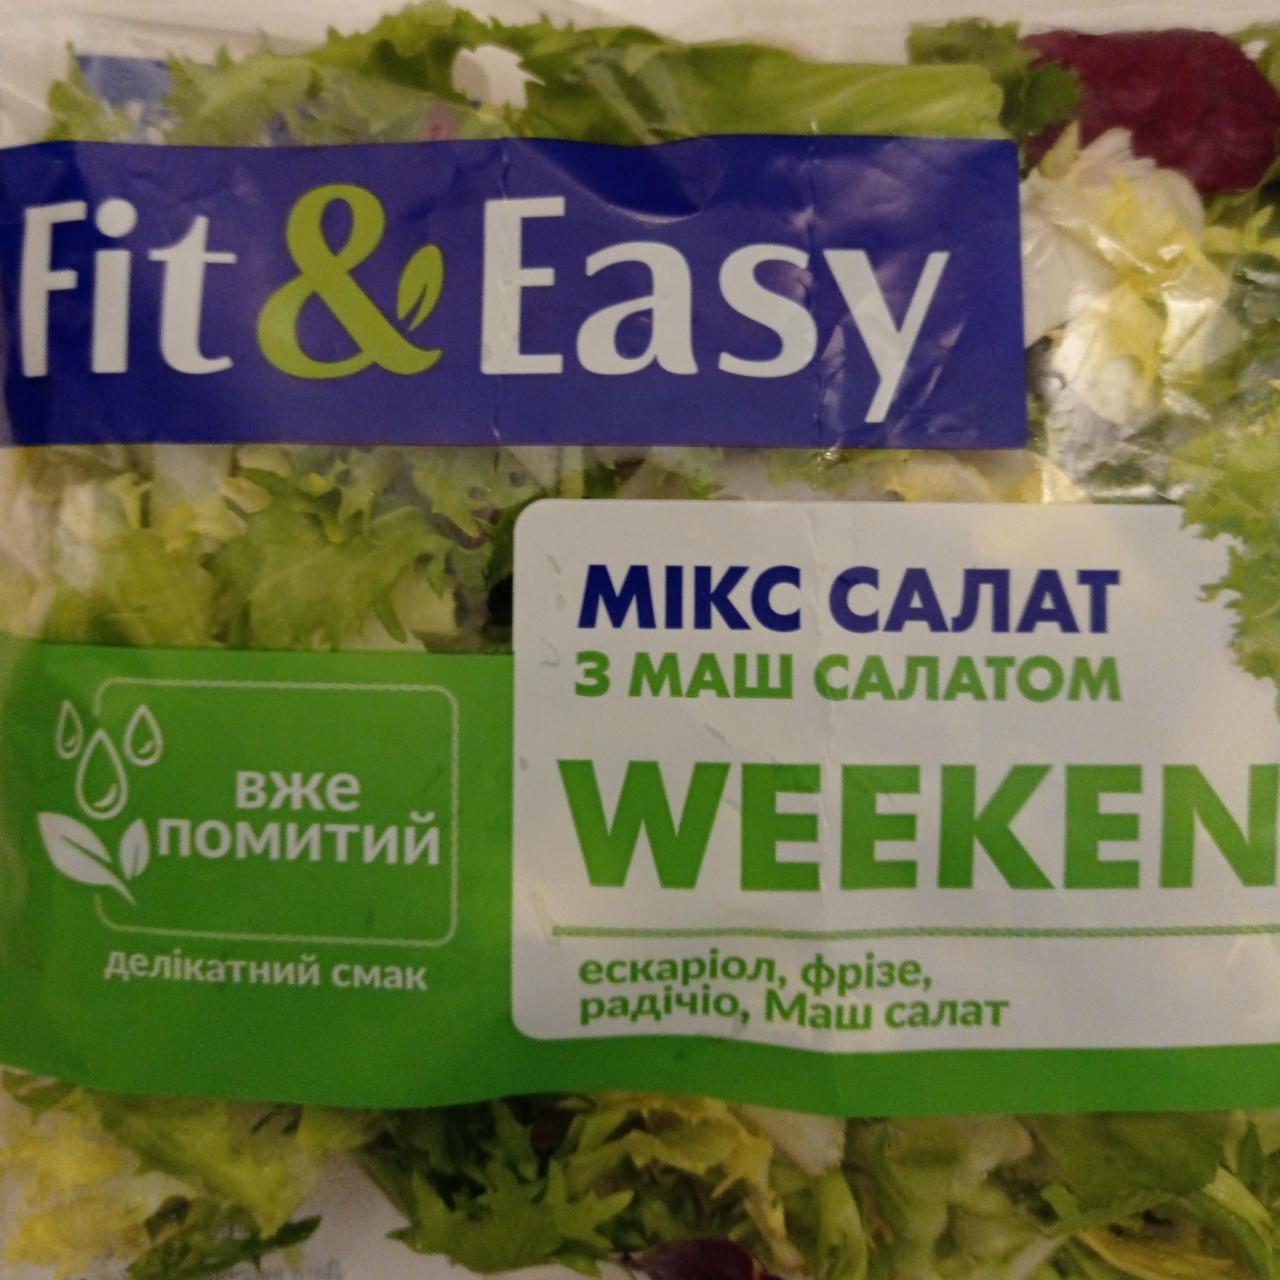 Фото - Микс салат с маш салатом Weekend Fit&Easy